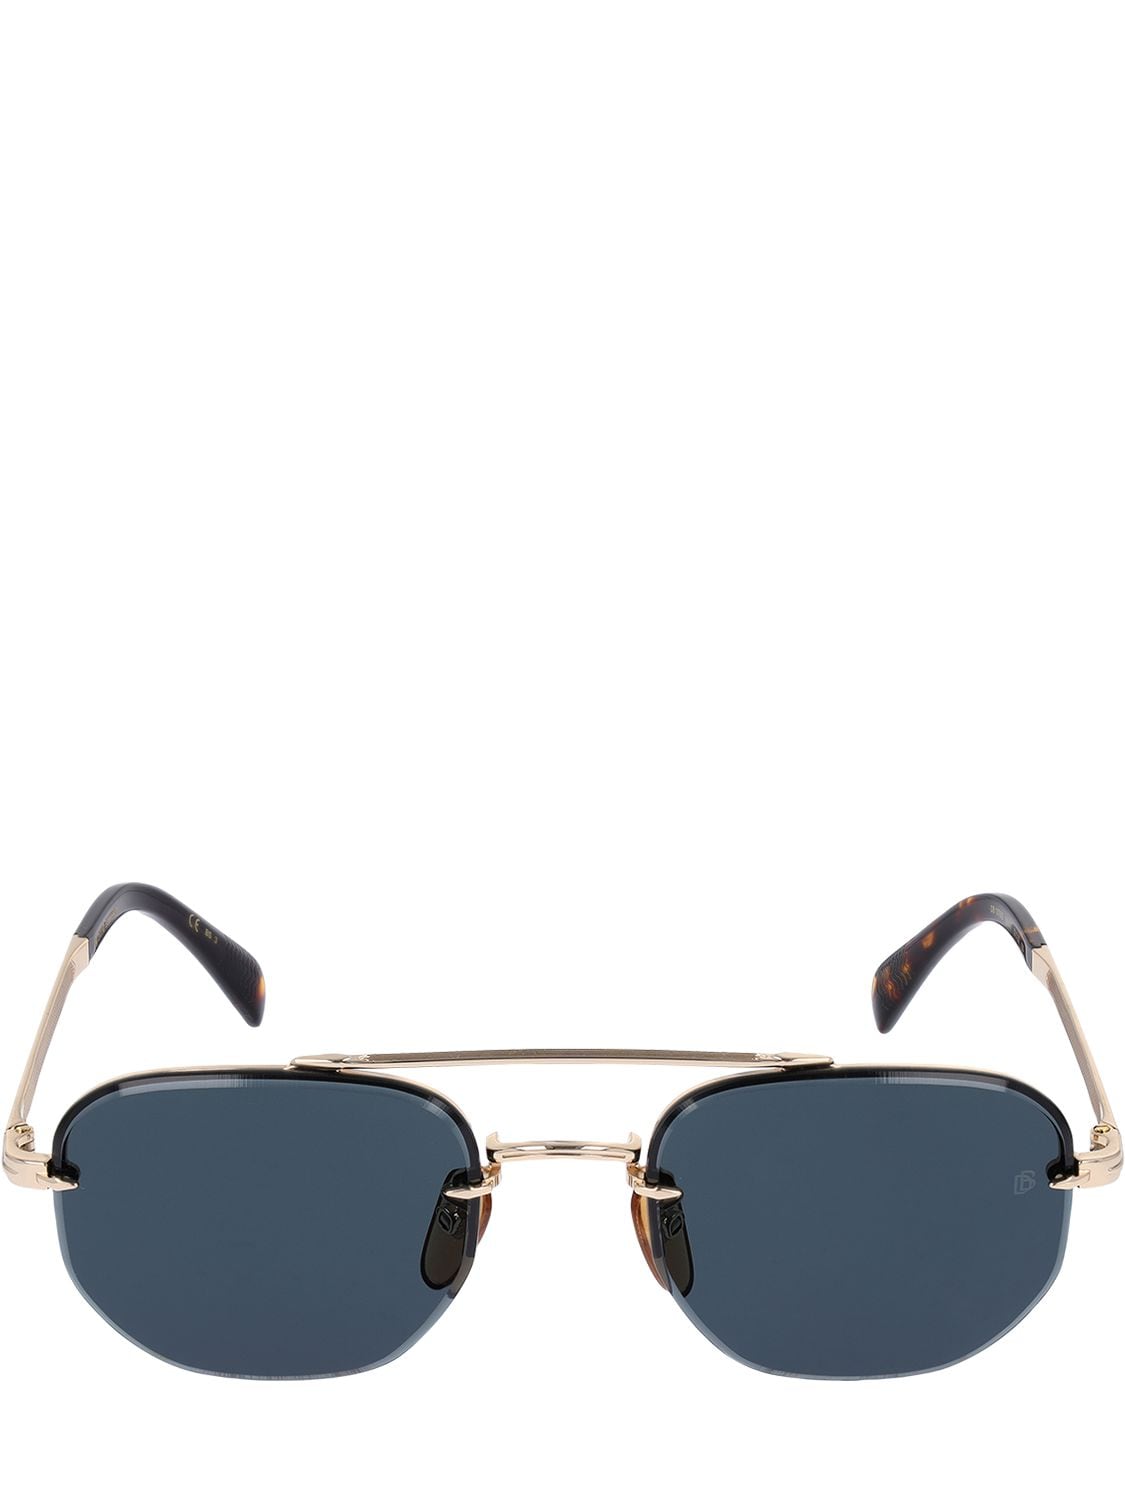 Image of Db Geometric Stainless Steel Sunglasses